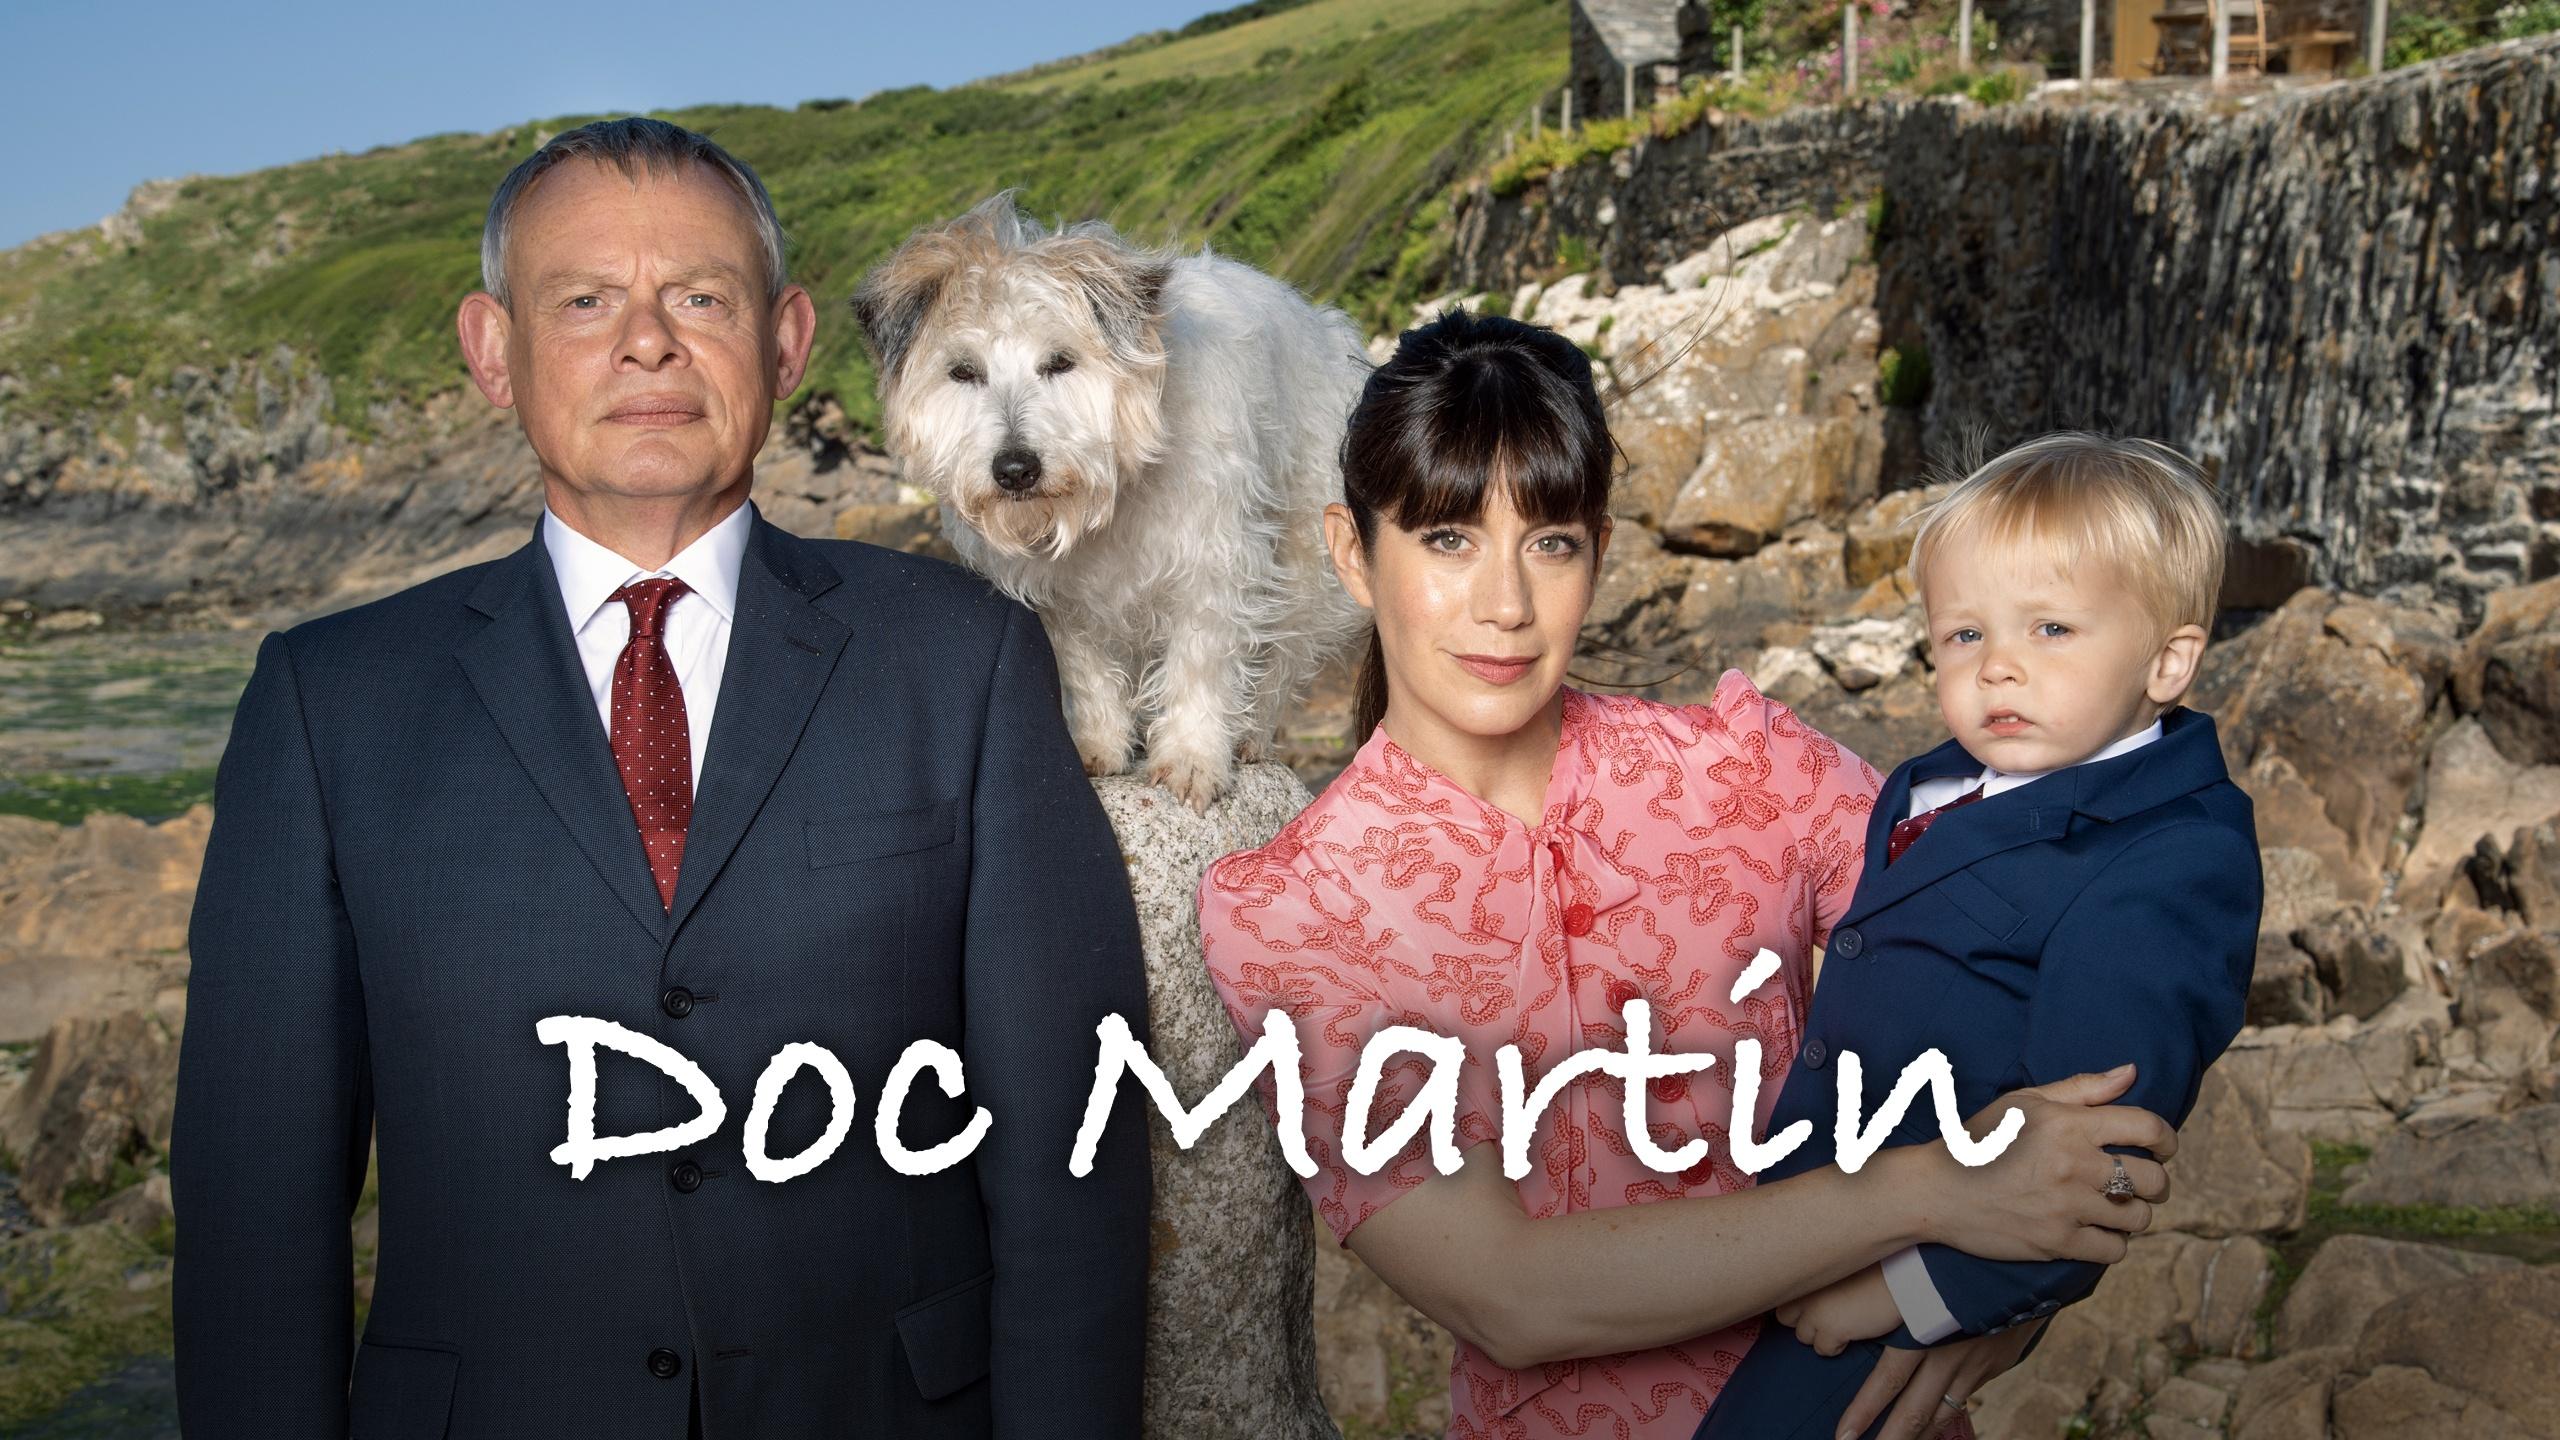 The main cast of Doc Martin